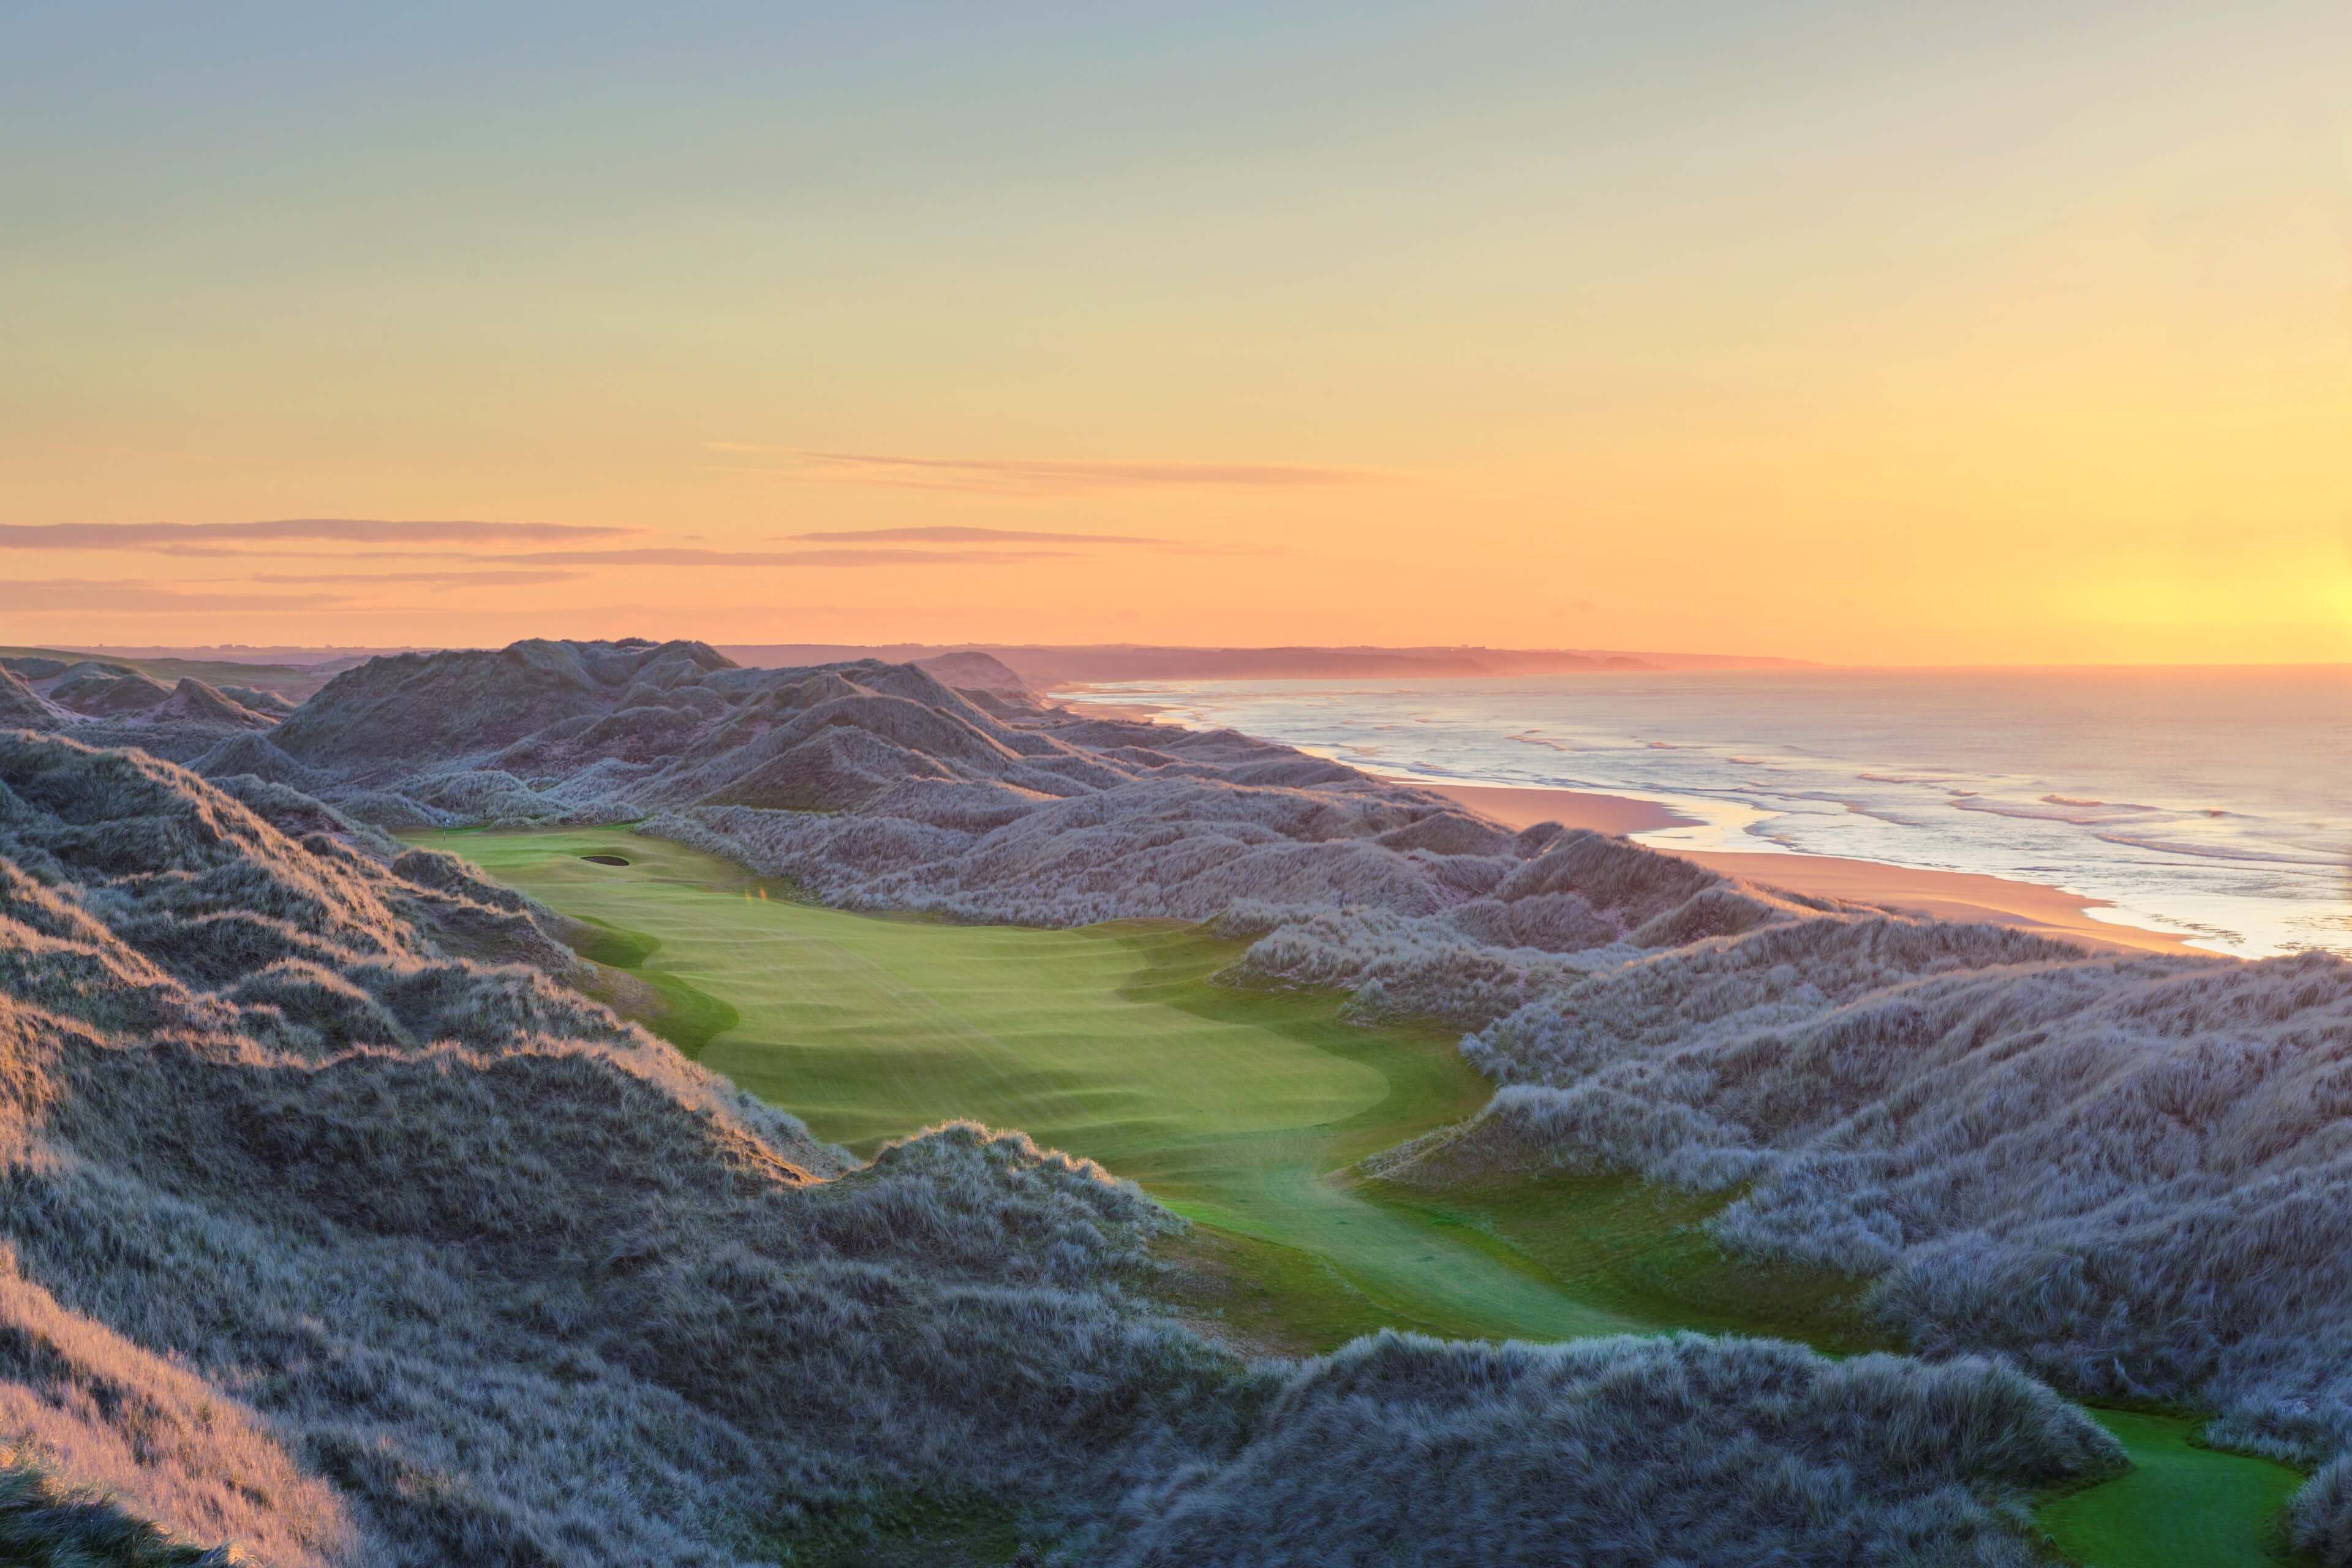 Trump International Golf Links, Scotland - Golf Course